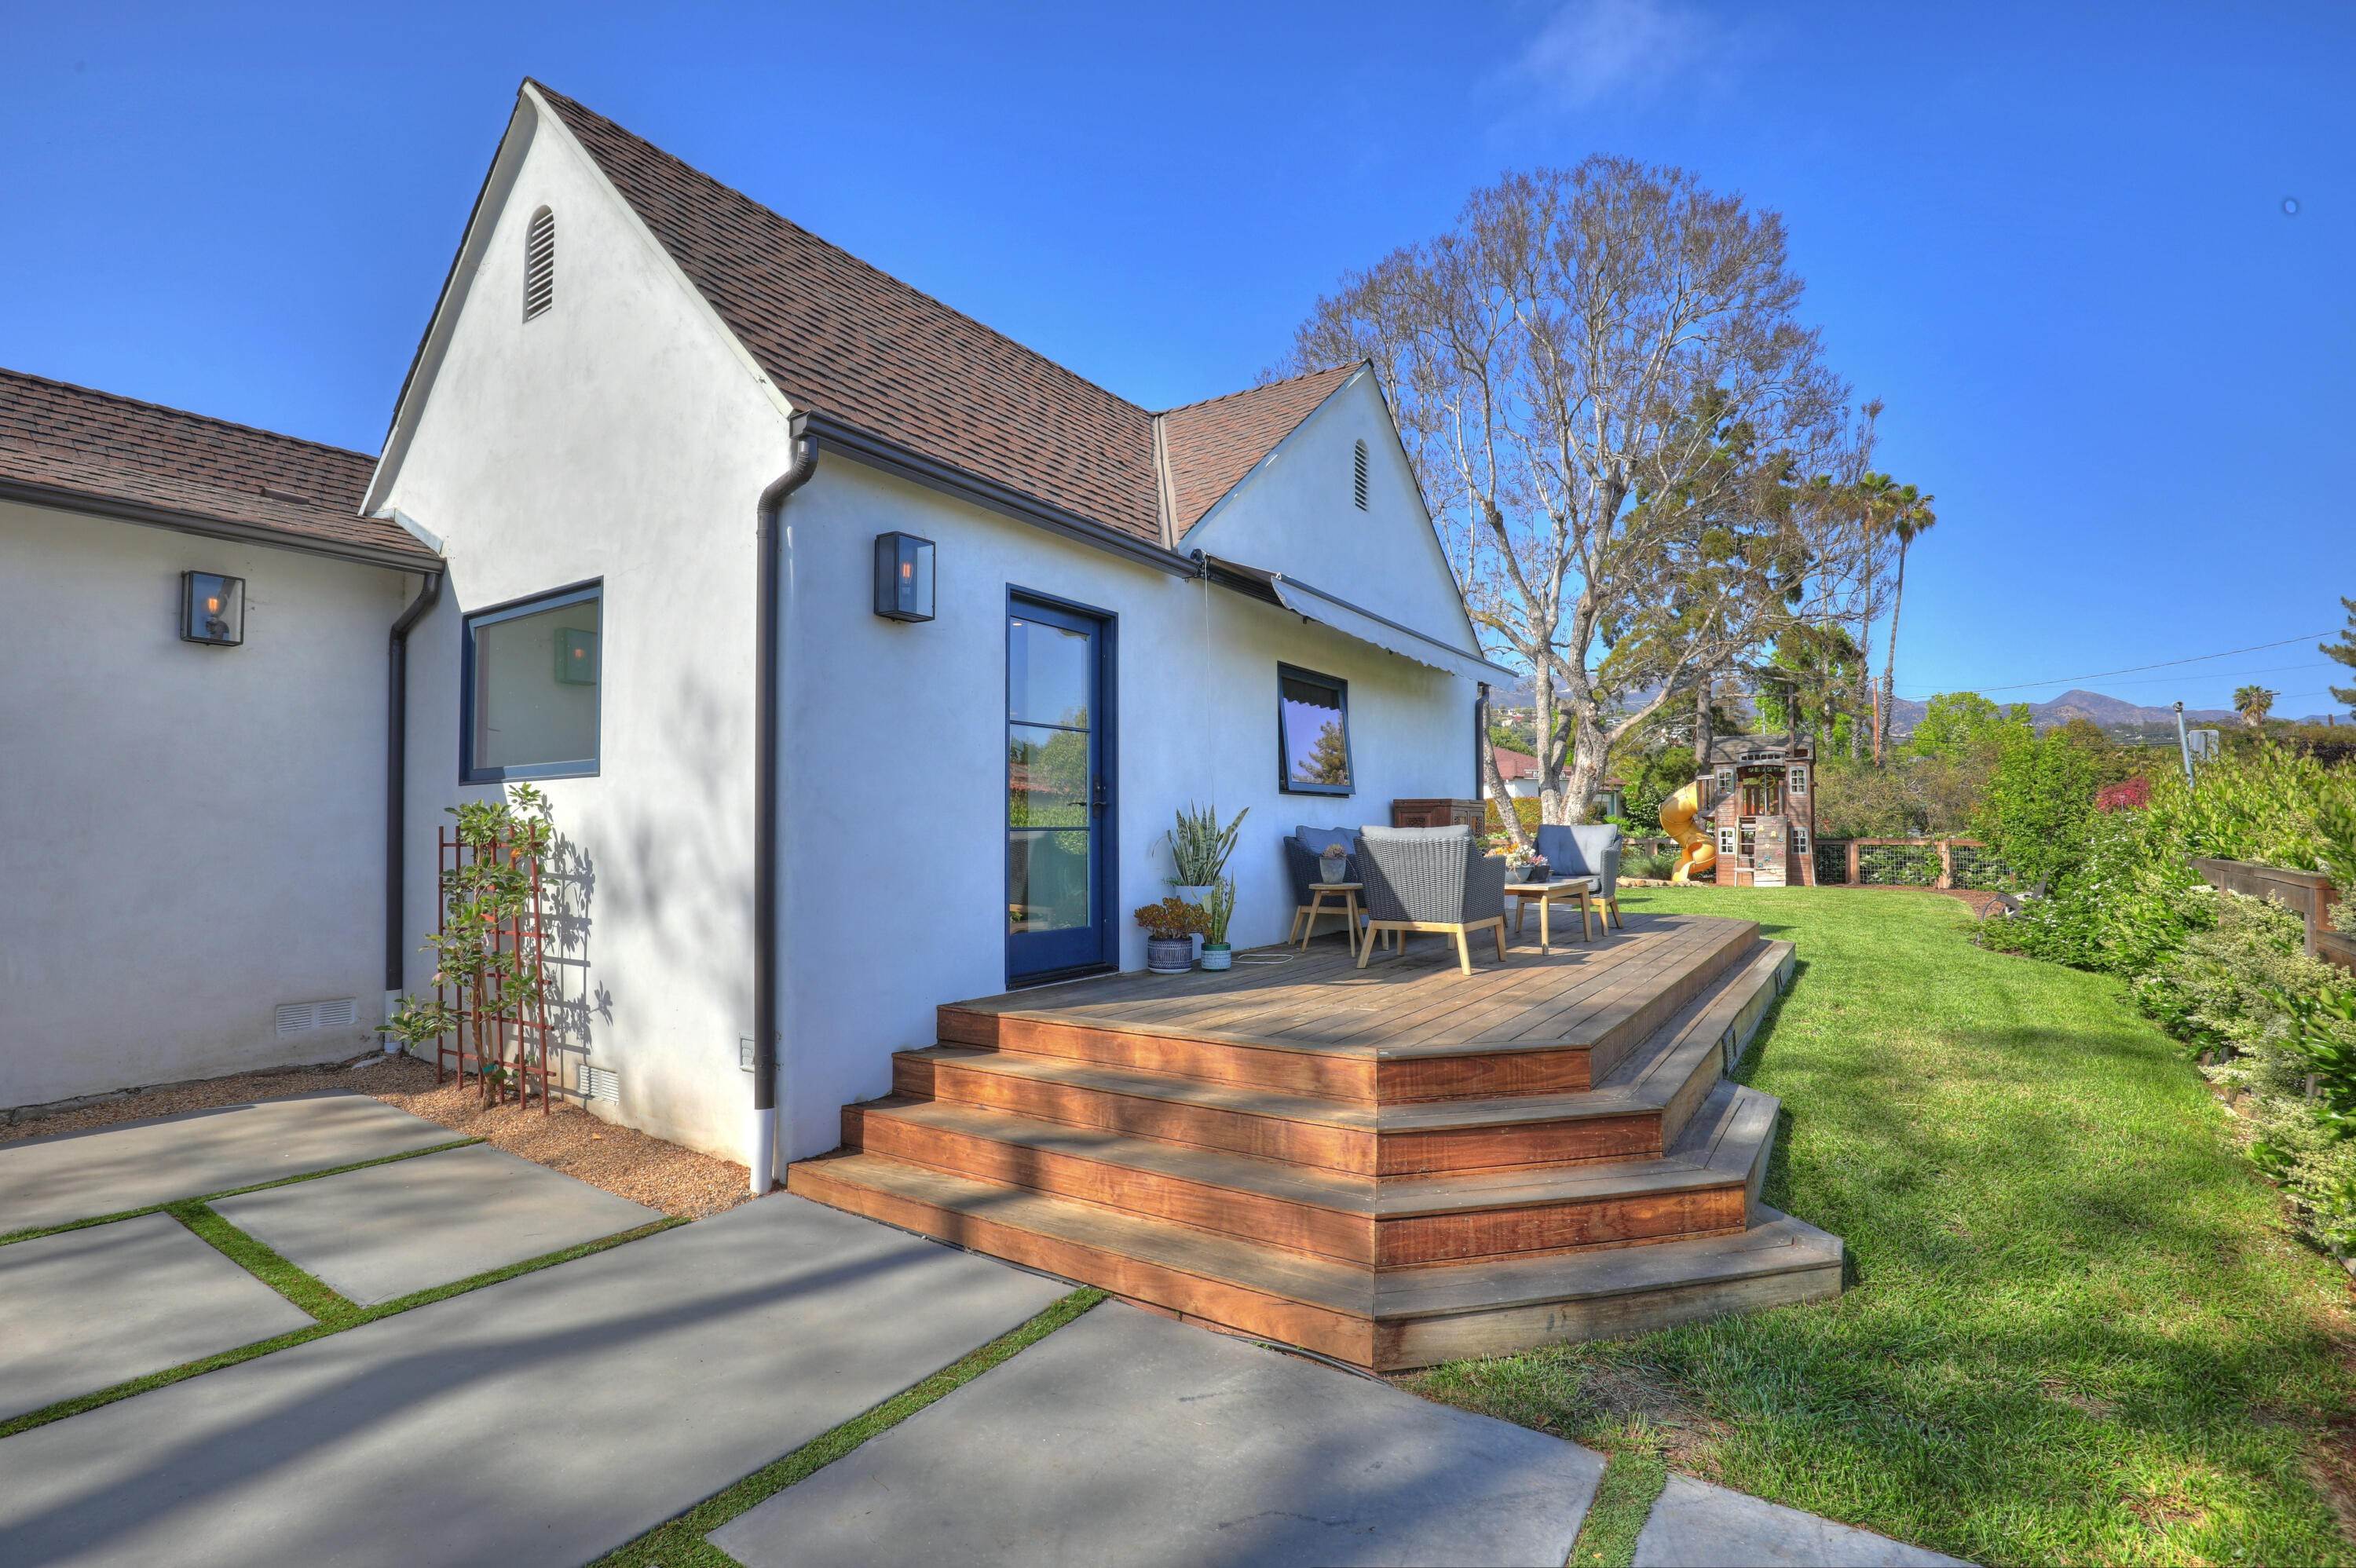 22. Estate for Sale at 203 Calle Manzanita Santa Barbara, California 93105 United States